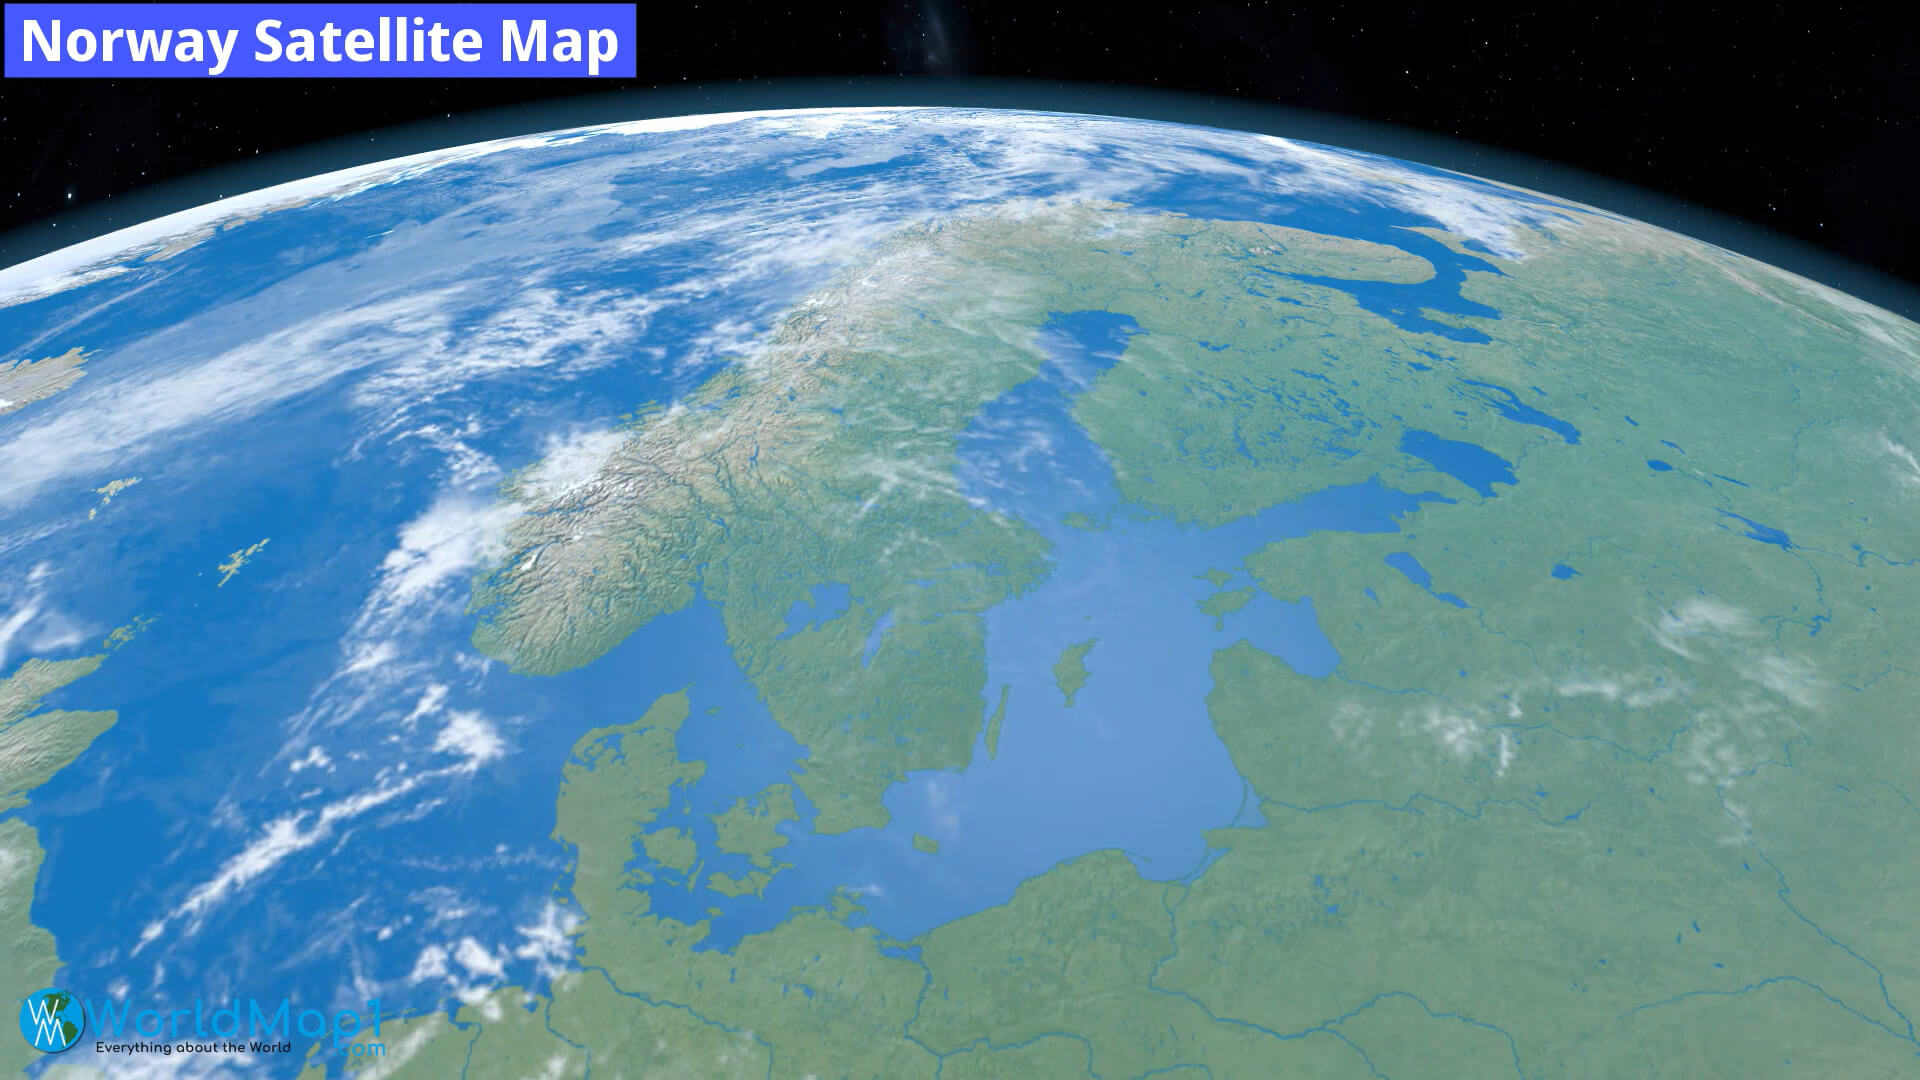 Norway Satellite View